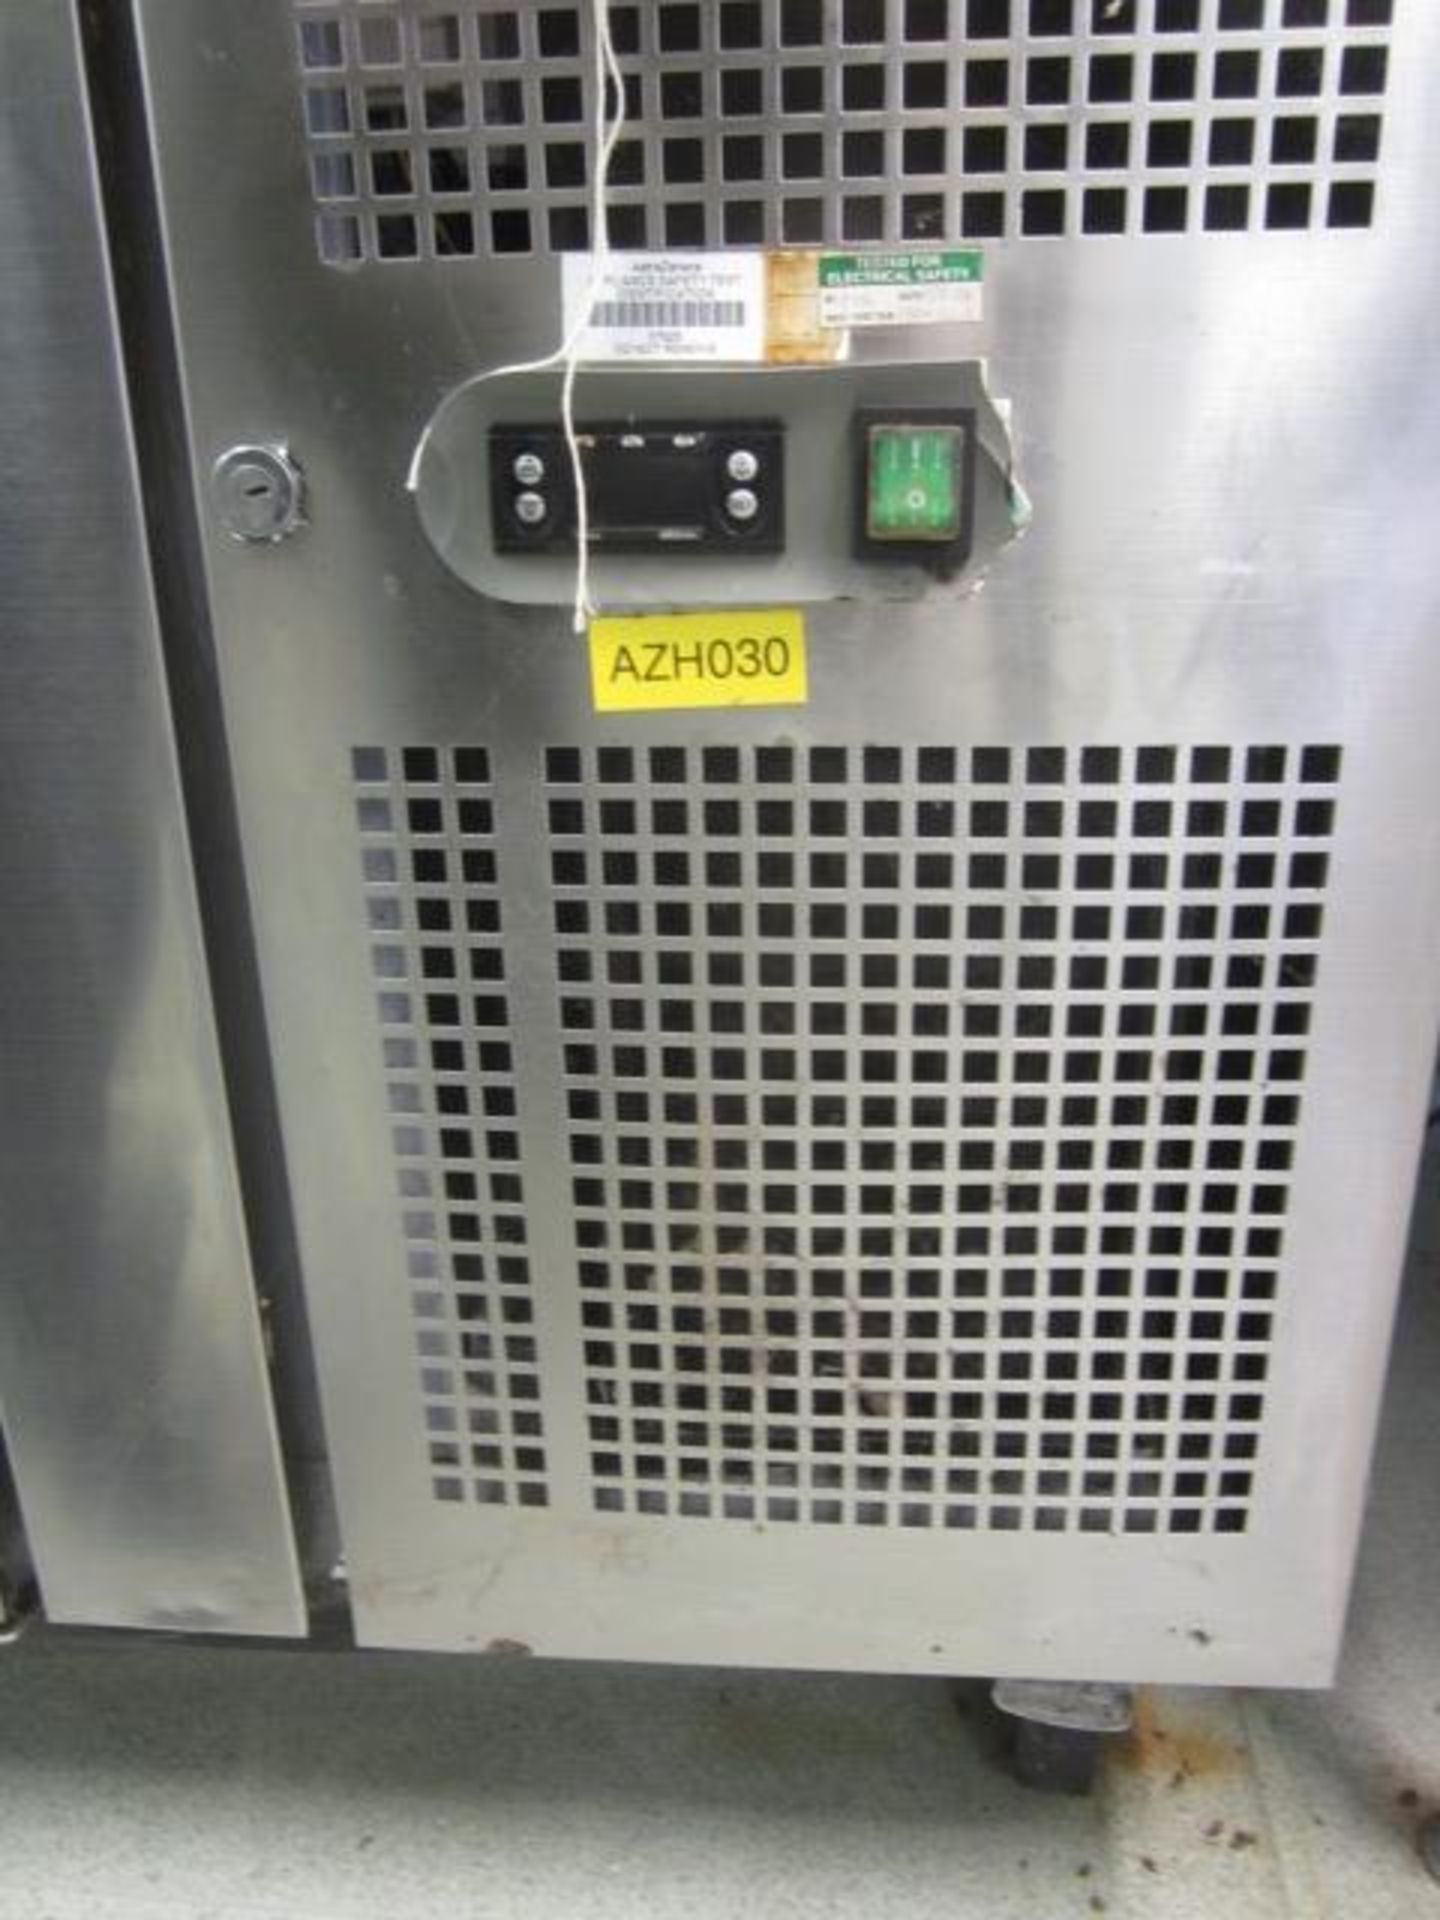 Unbadged stainless steel 4 door refrigerator with preparation worktop, 2230mm x 700mm x H850mm - Image 2 of 5